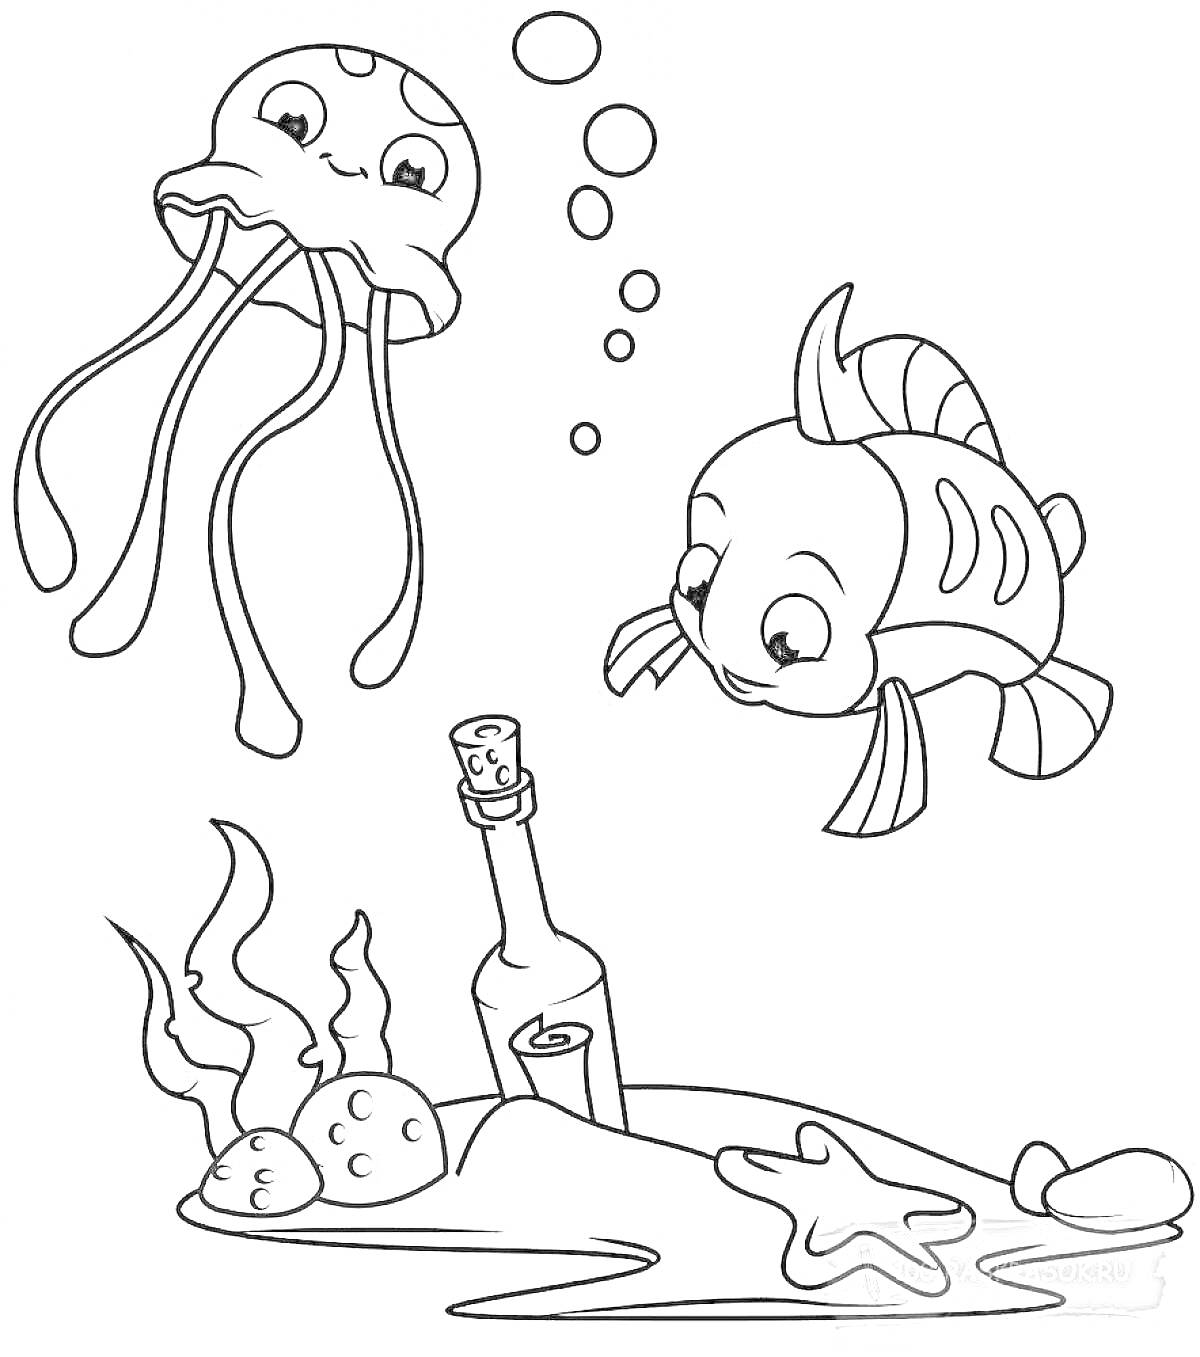 Раскраска Медуза, рыбка, бутылка с посланием, водоросли, ракушки, песок и звезда на морском дне